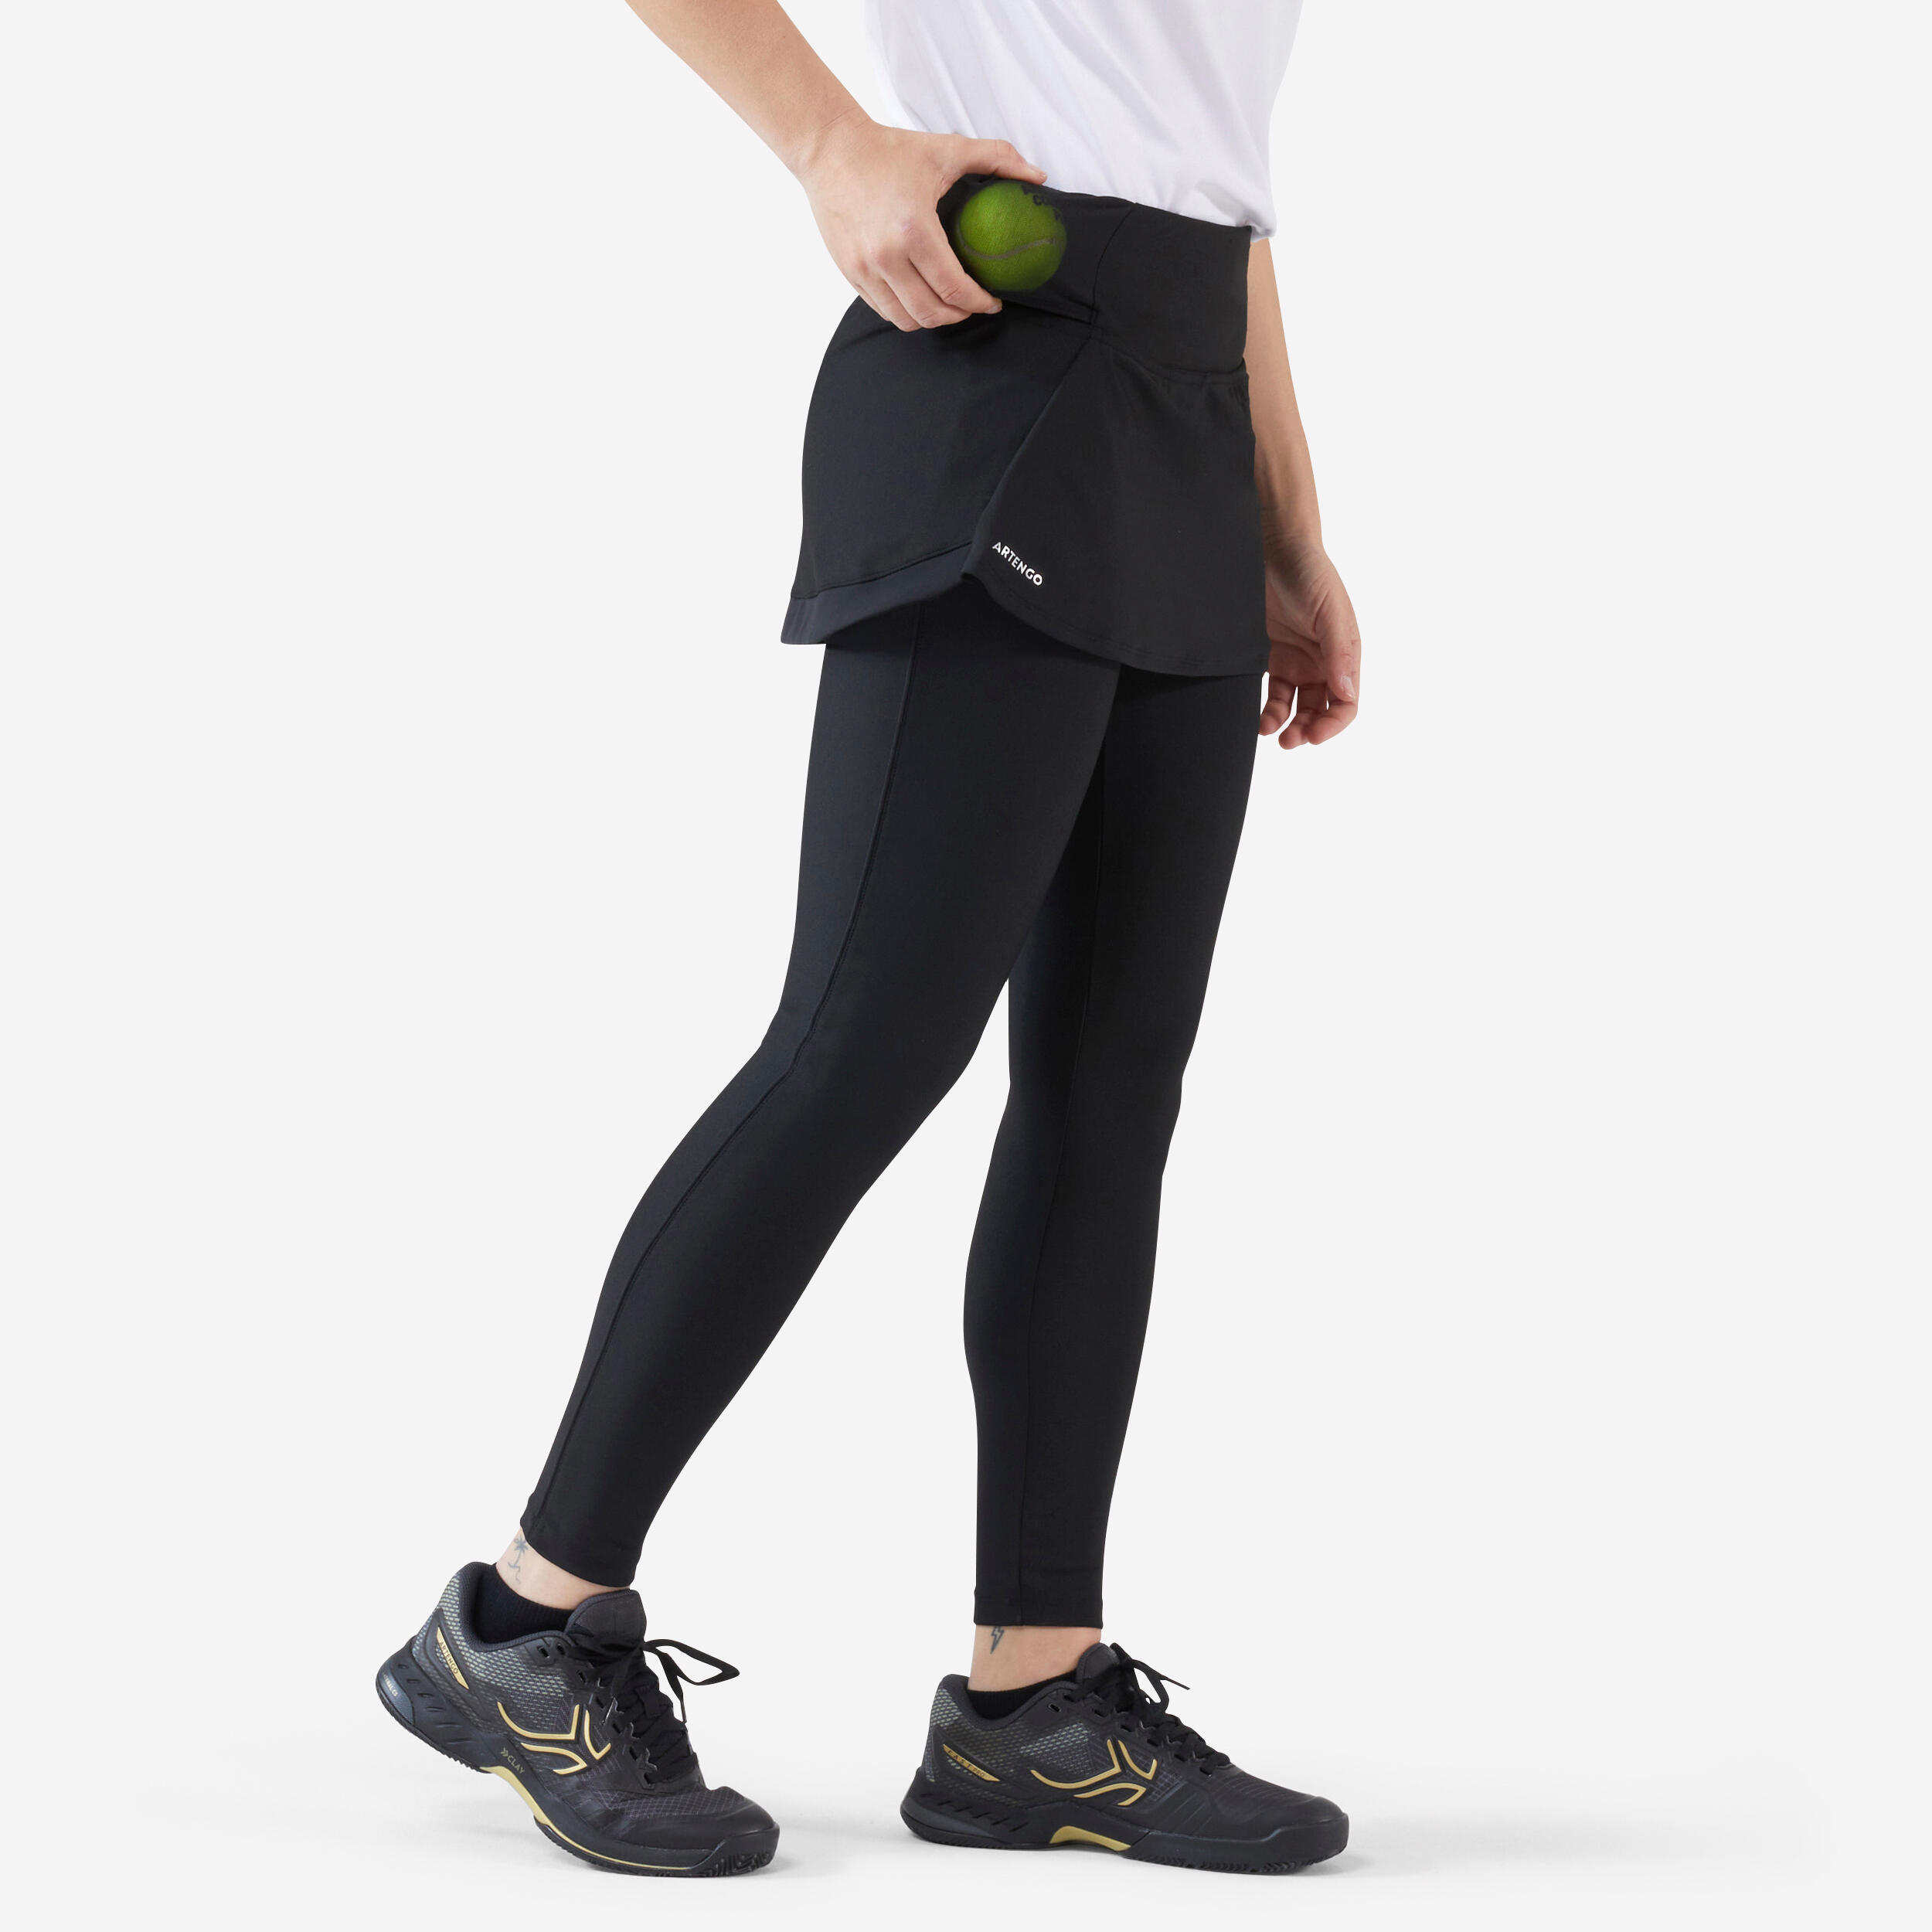 jupe legging tennis dry femme -hip ball noir - artengo